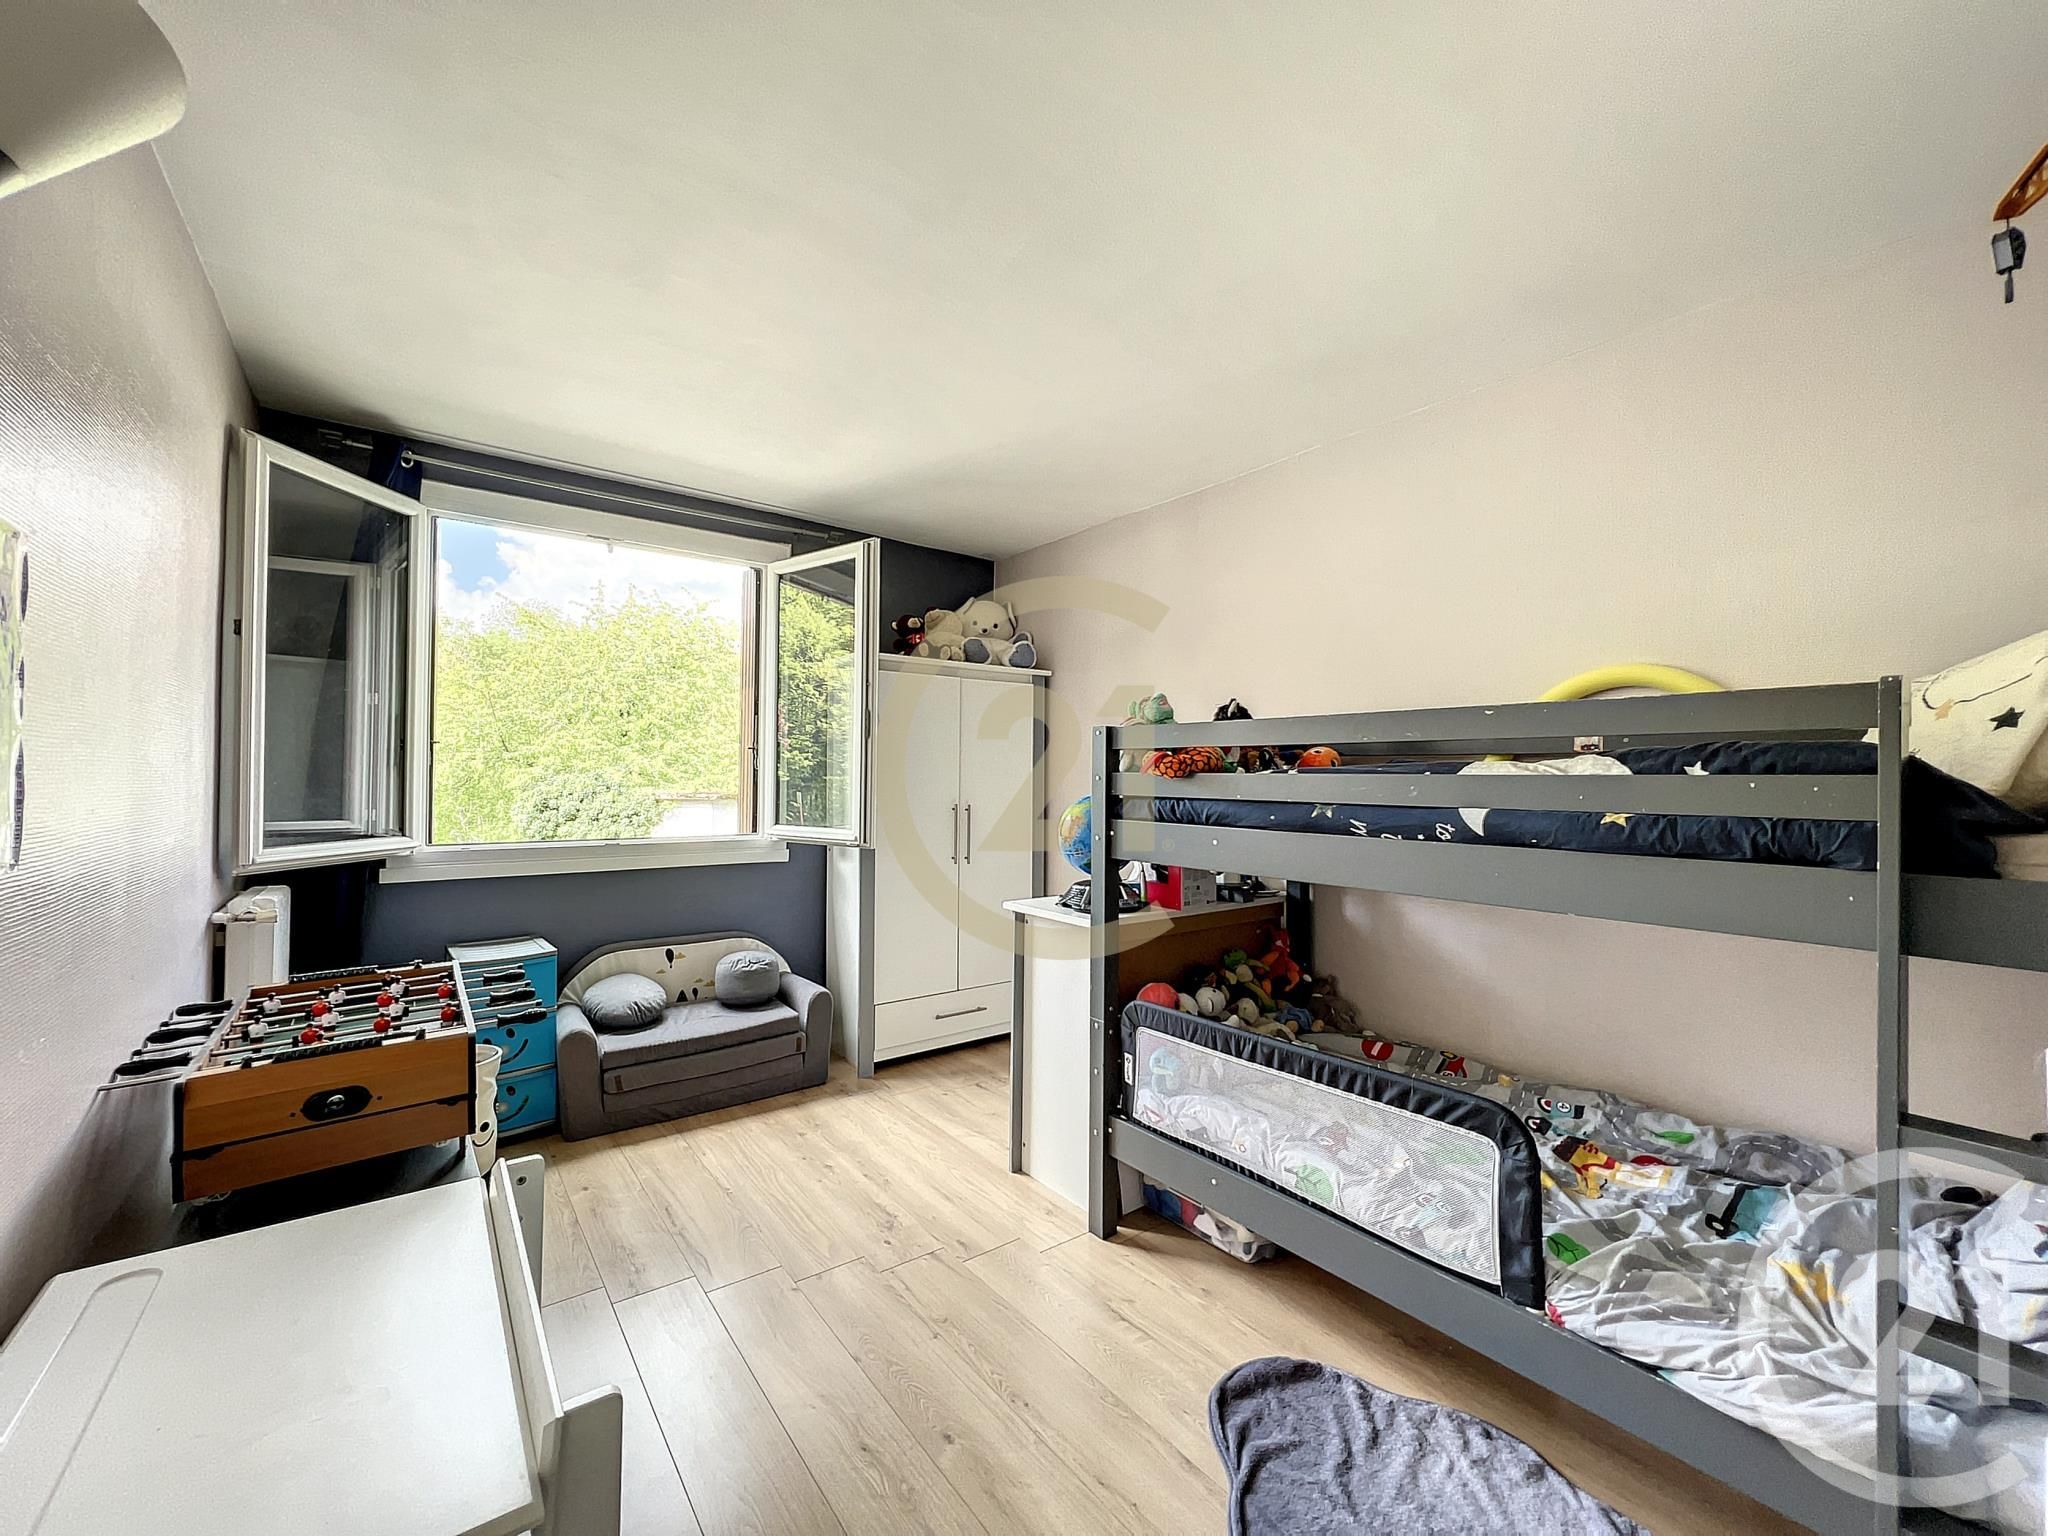 Appartement a louer ville-d'avray - 3 pièce(s) - 71.59 m2 - Surfyn